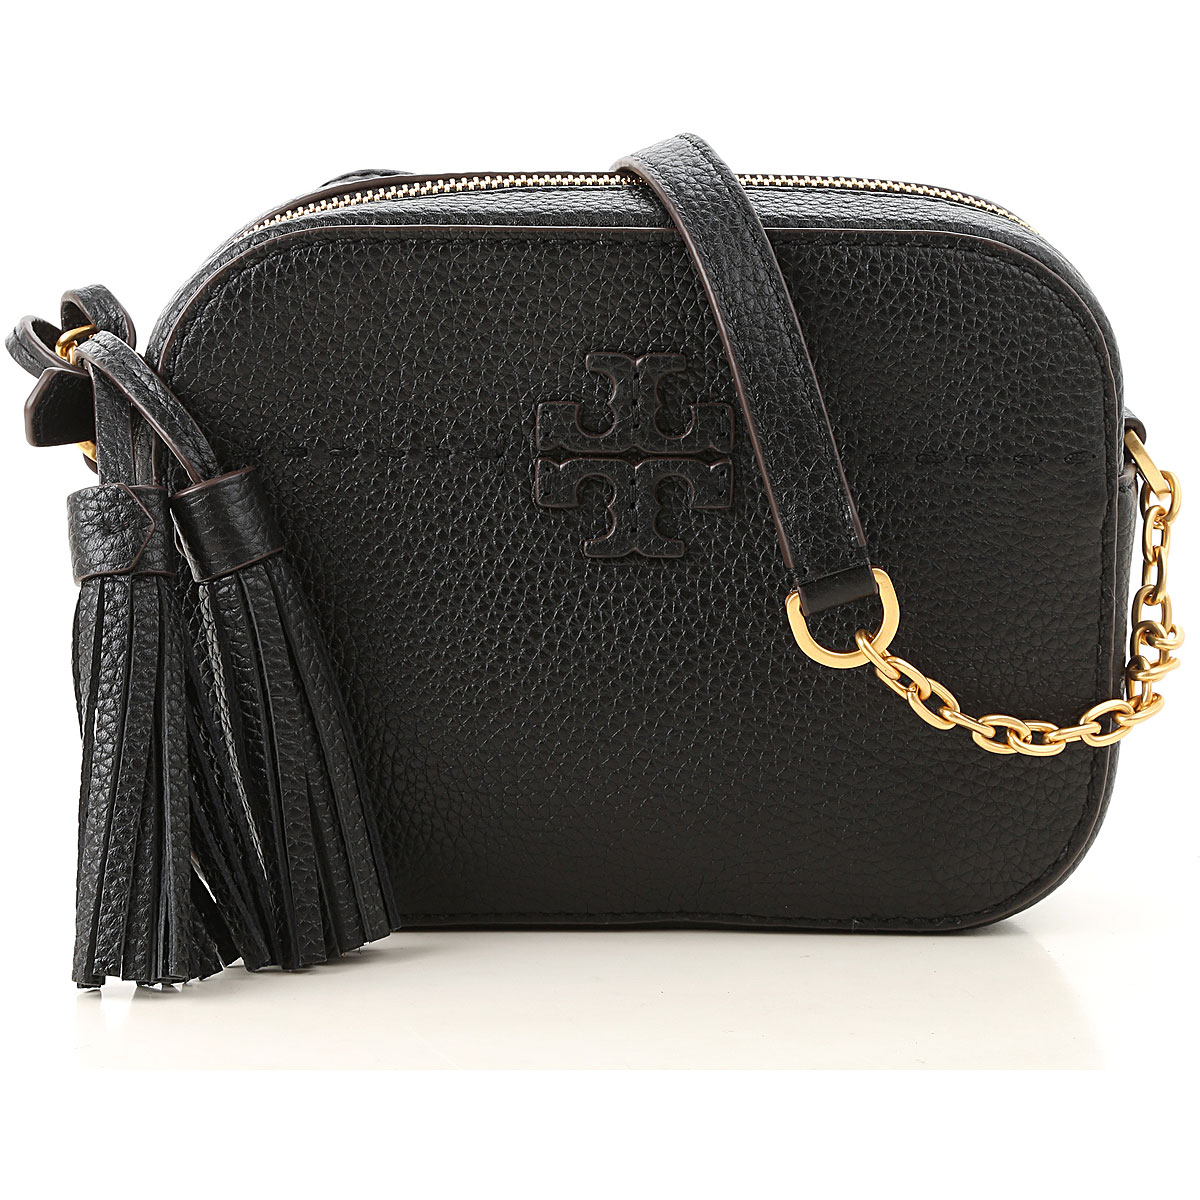 Handbags Tory Burch, Style code: 50584-001-